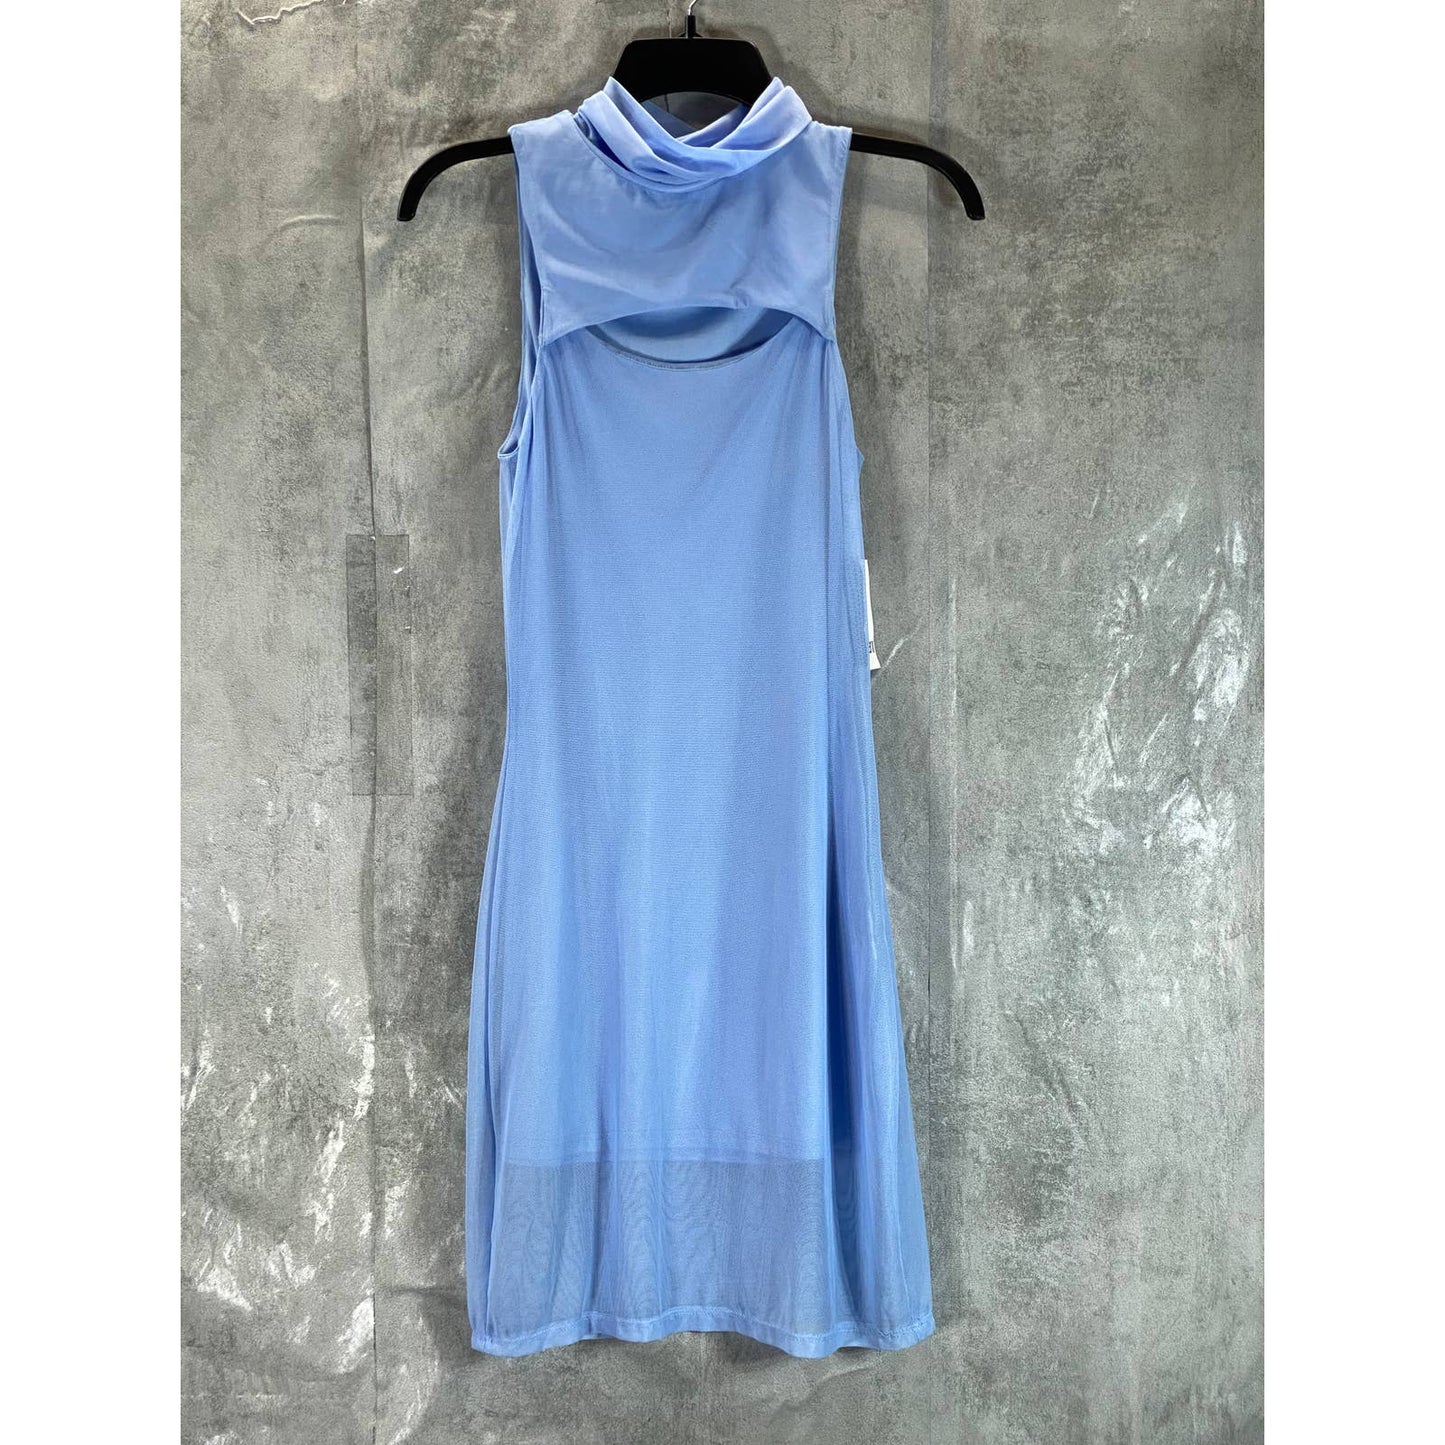 BAR III Women's Blue Whisper Mesh Mock-Neck Sleeveless Mini Dress SZ XS